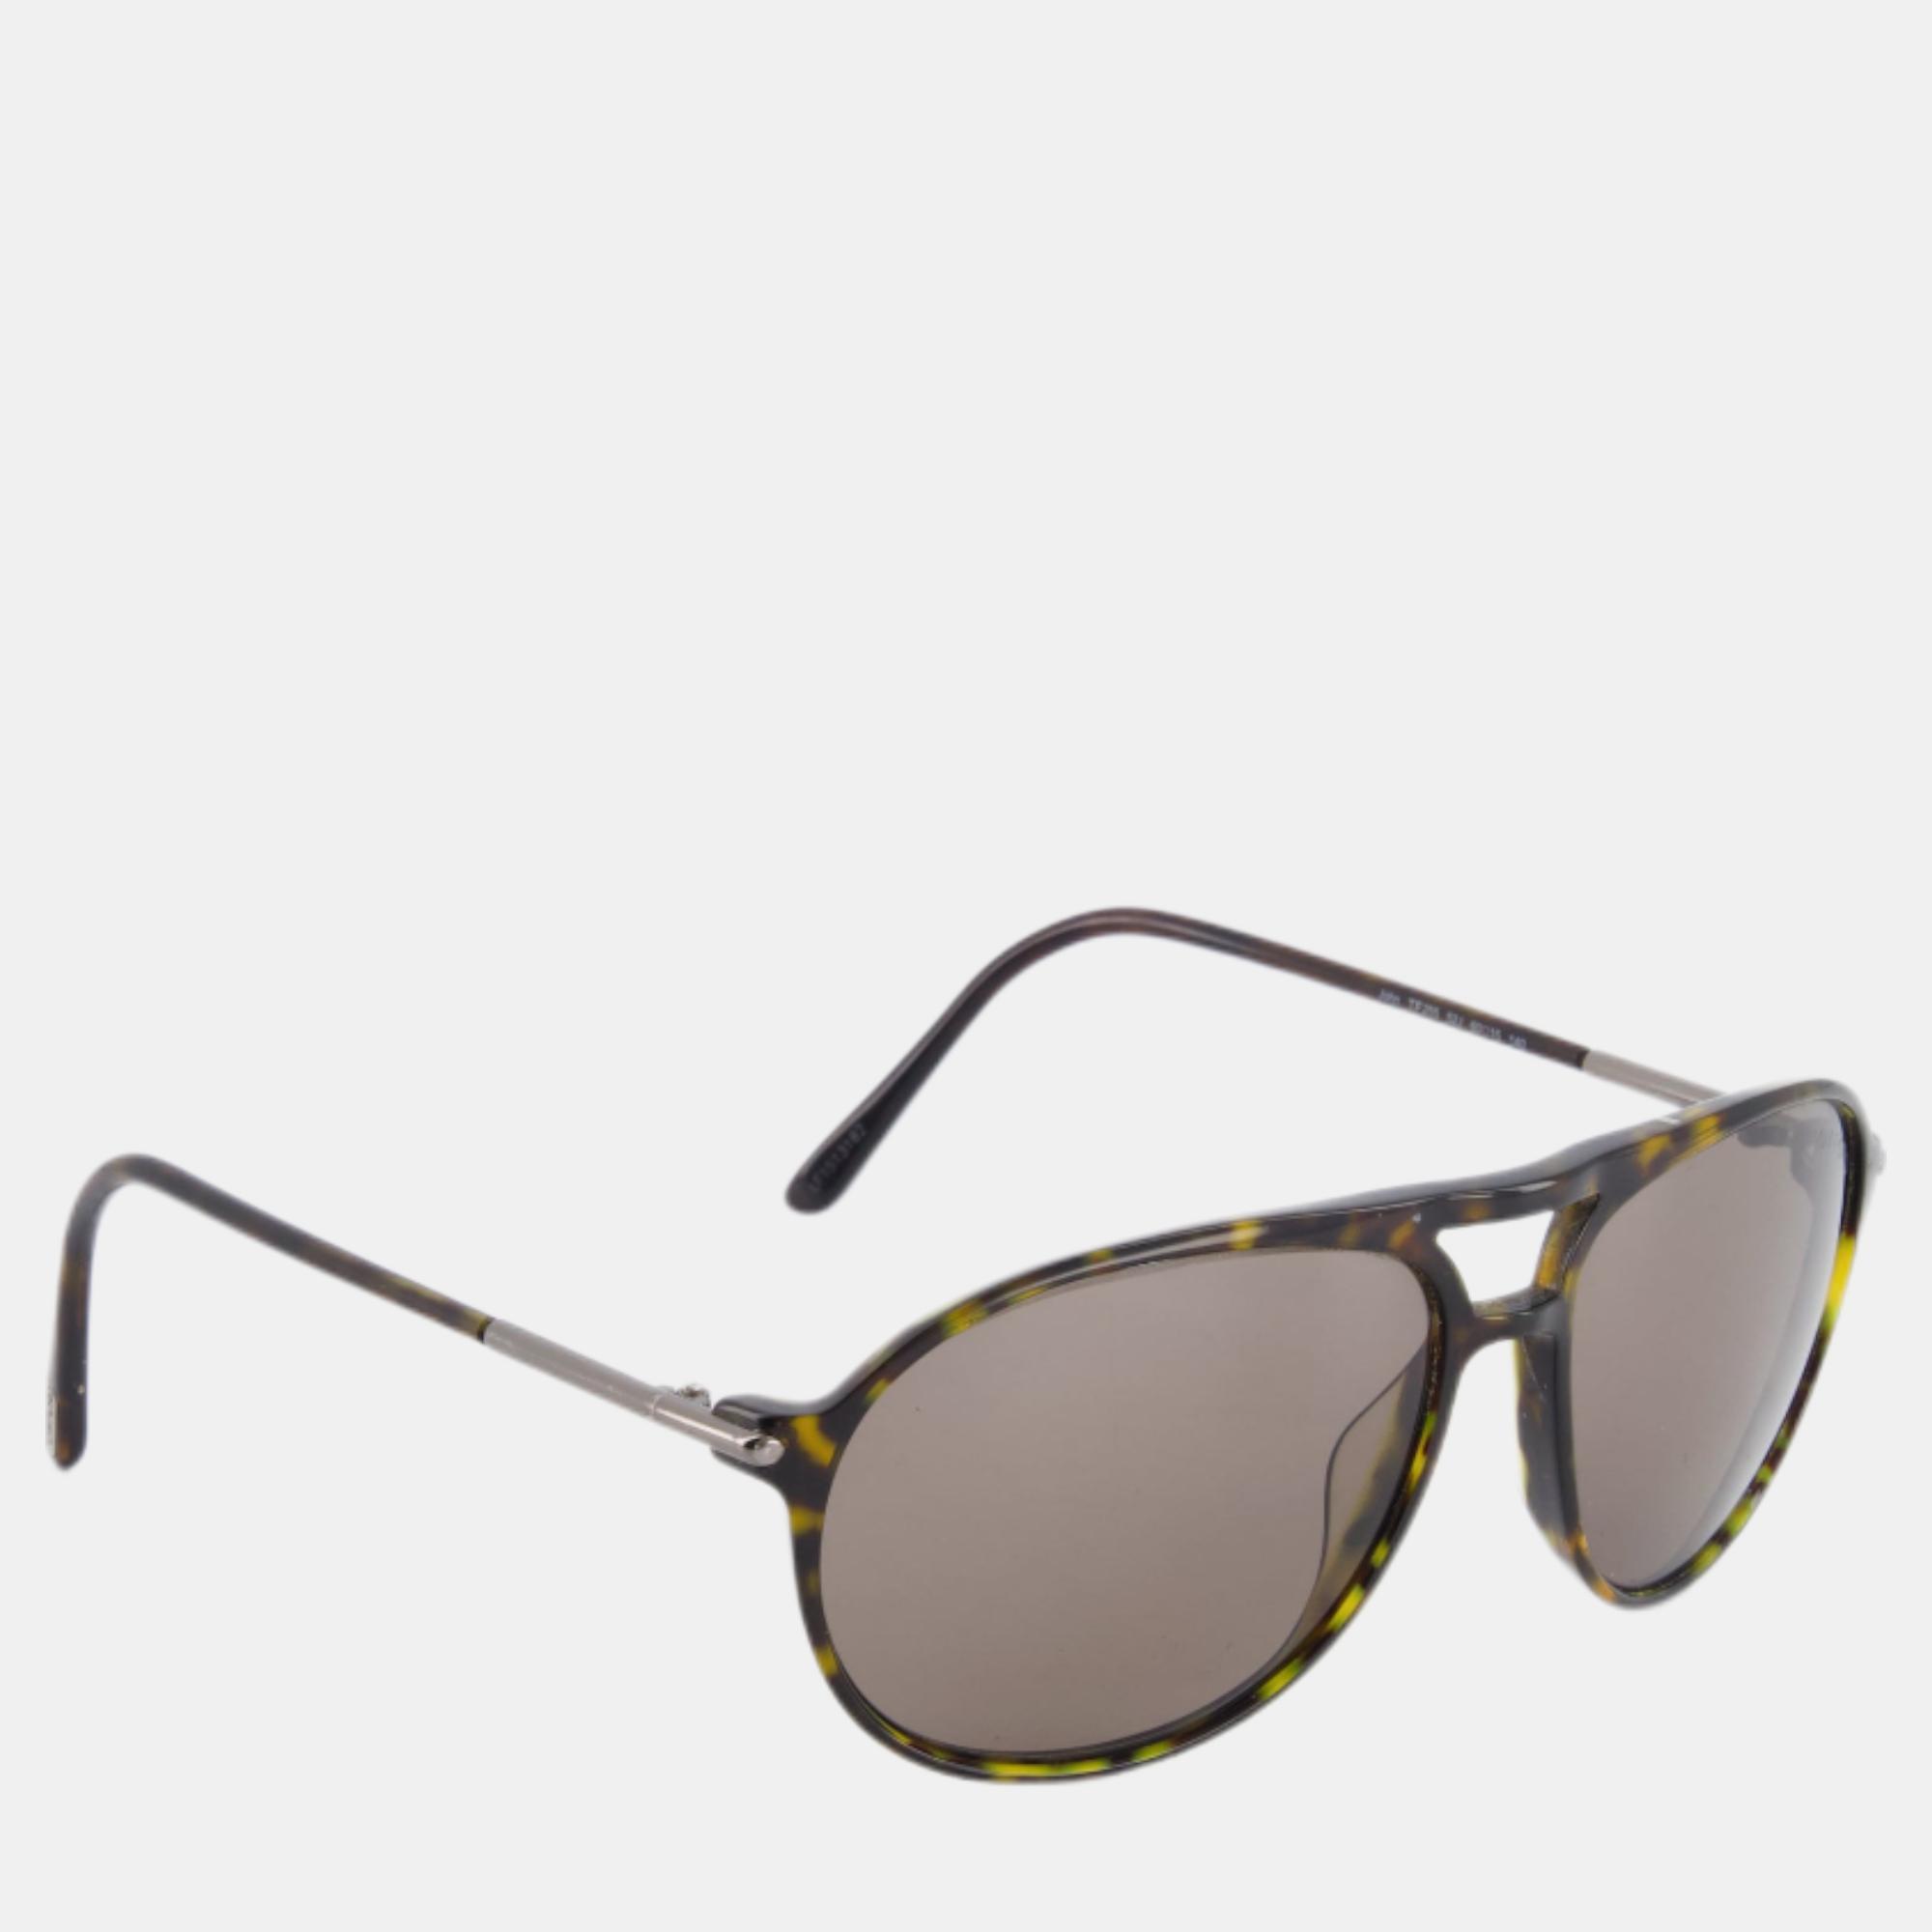 

Tom Ford Tortoiseshell Sunglasses, Black